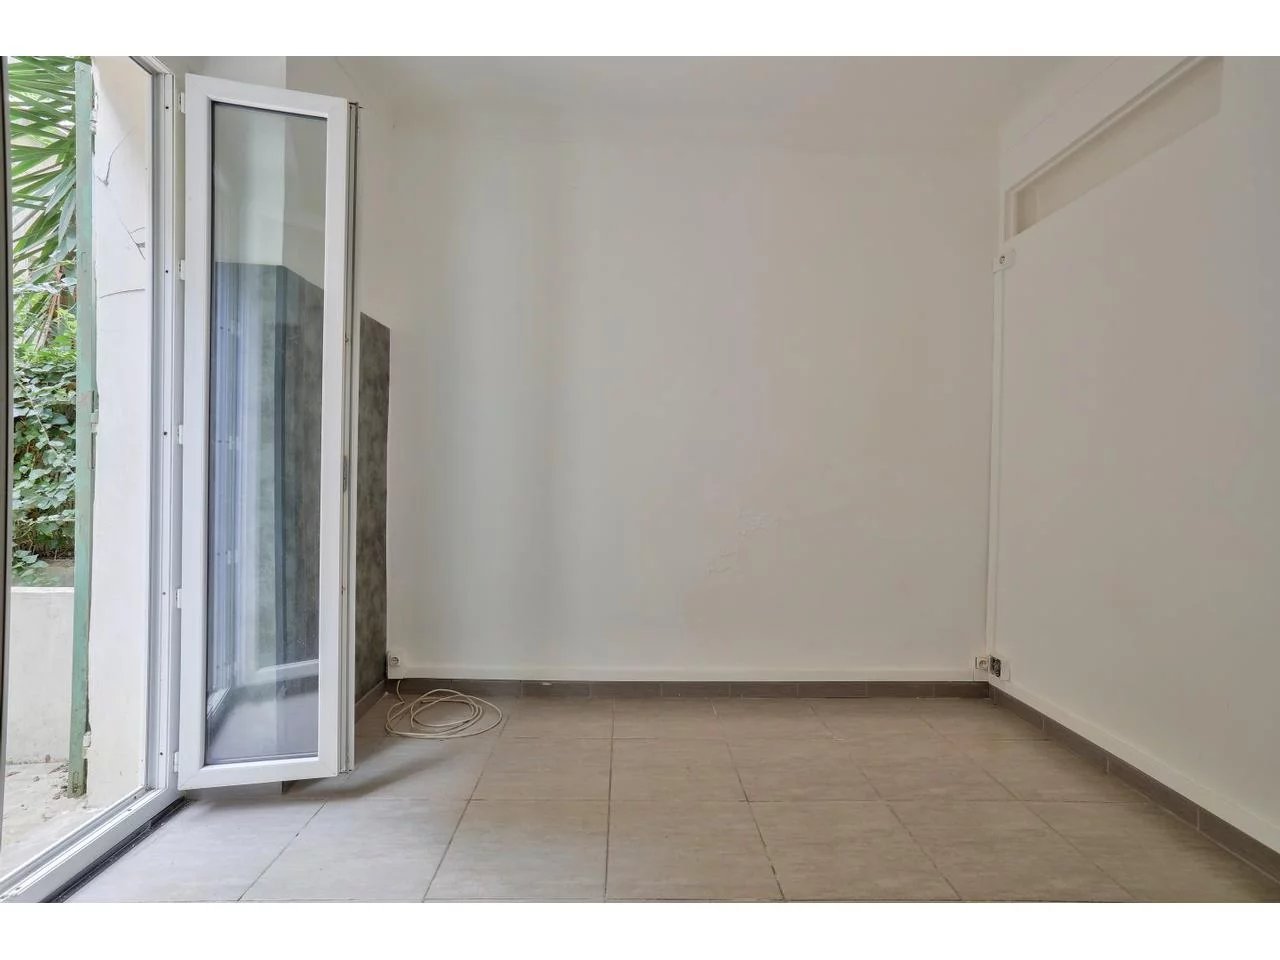 Appartement  1 Locali 12.87m2  In vendita    82 990 €